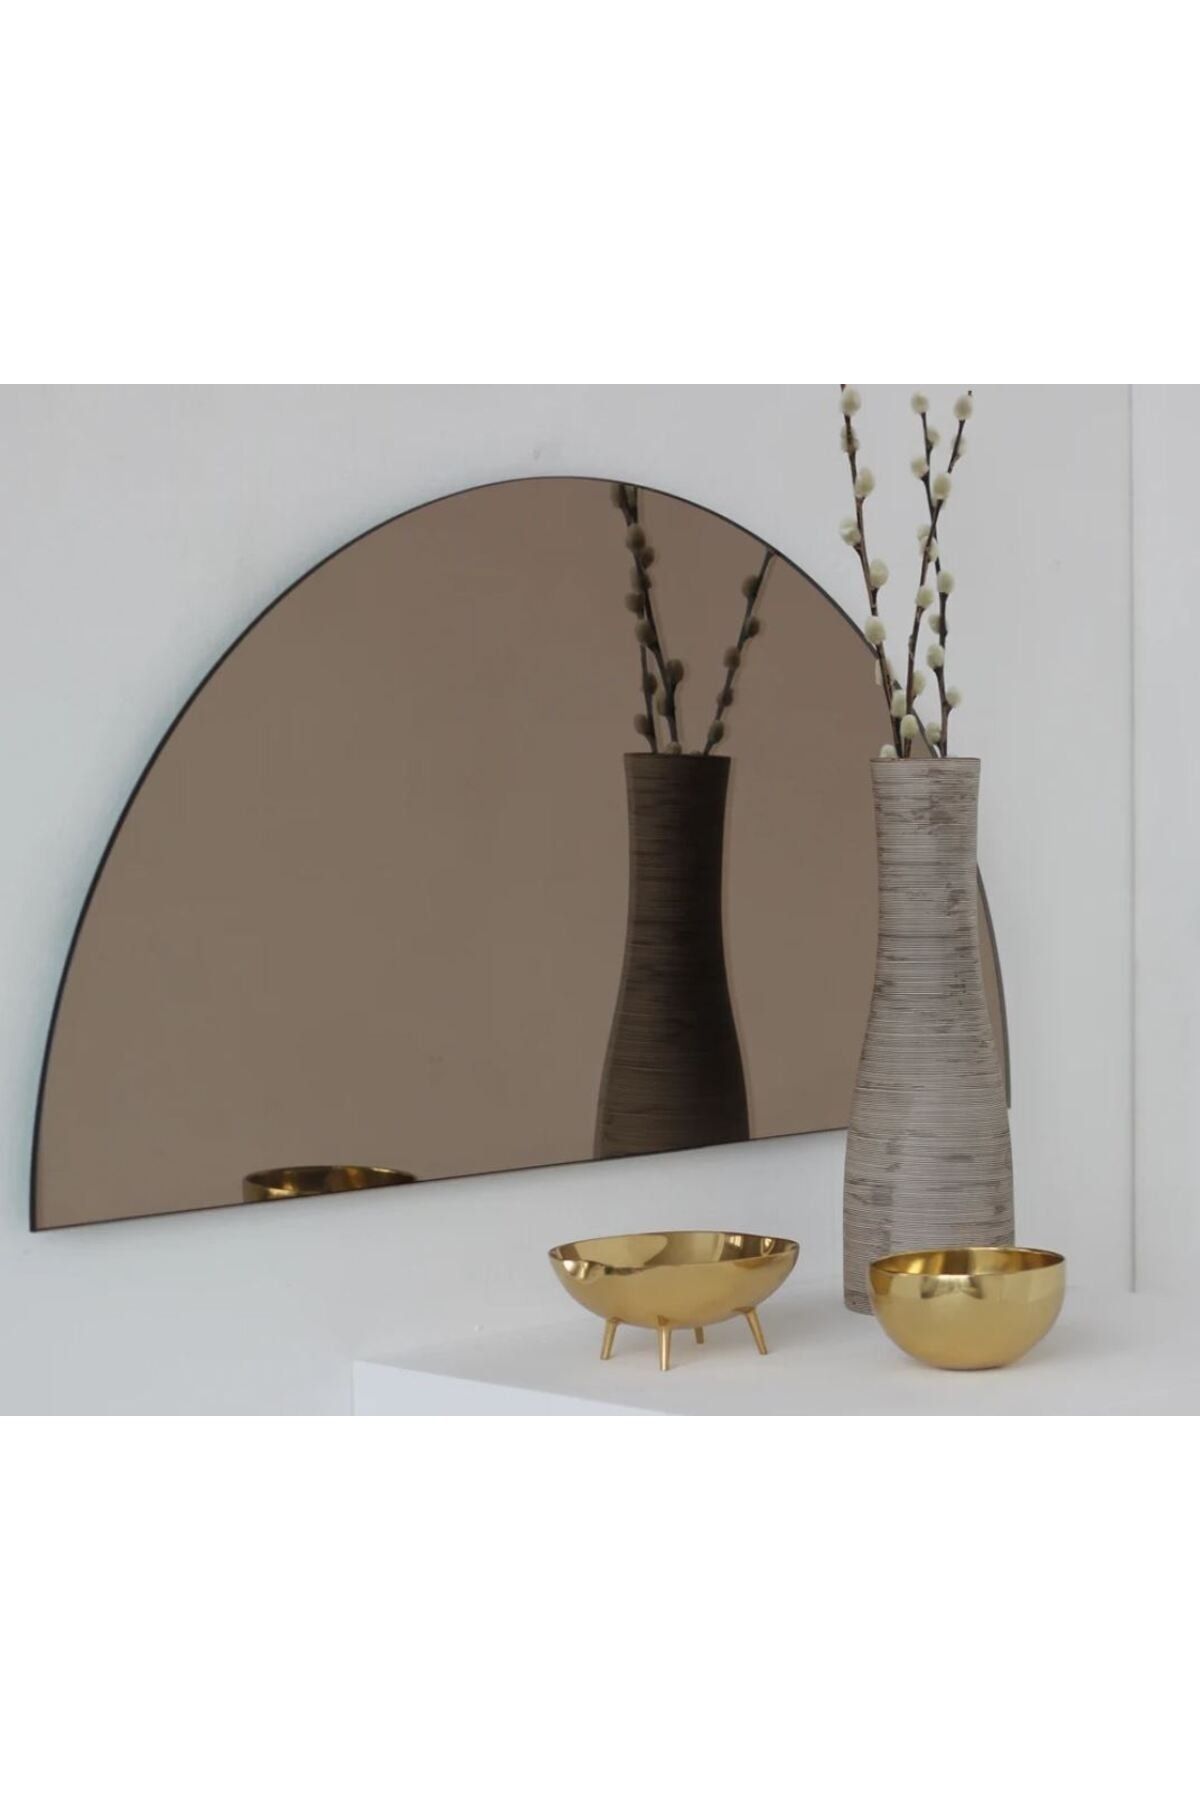 CG HOME Model Nes Dekoratif Ayna, Konsol Aynası, Hol Aynası, Dresuar Aynası, Bronz Ayna